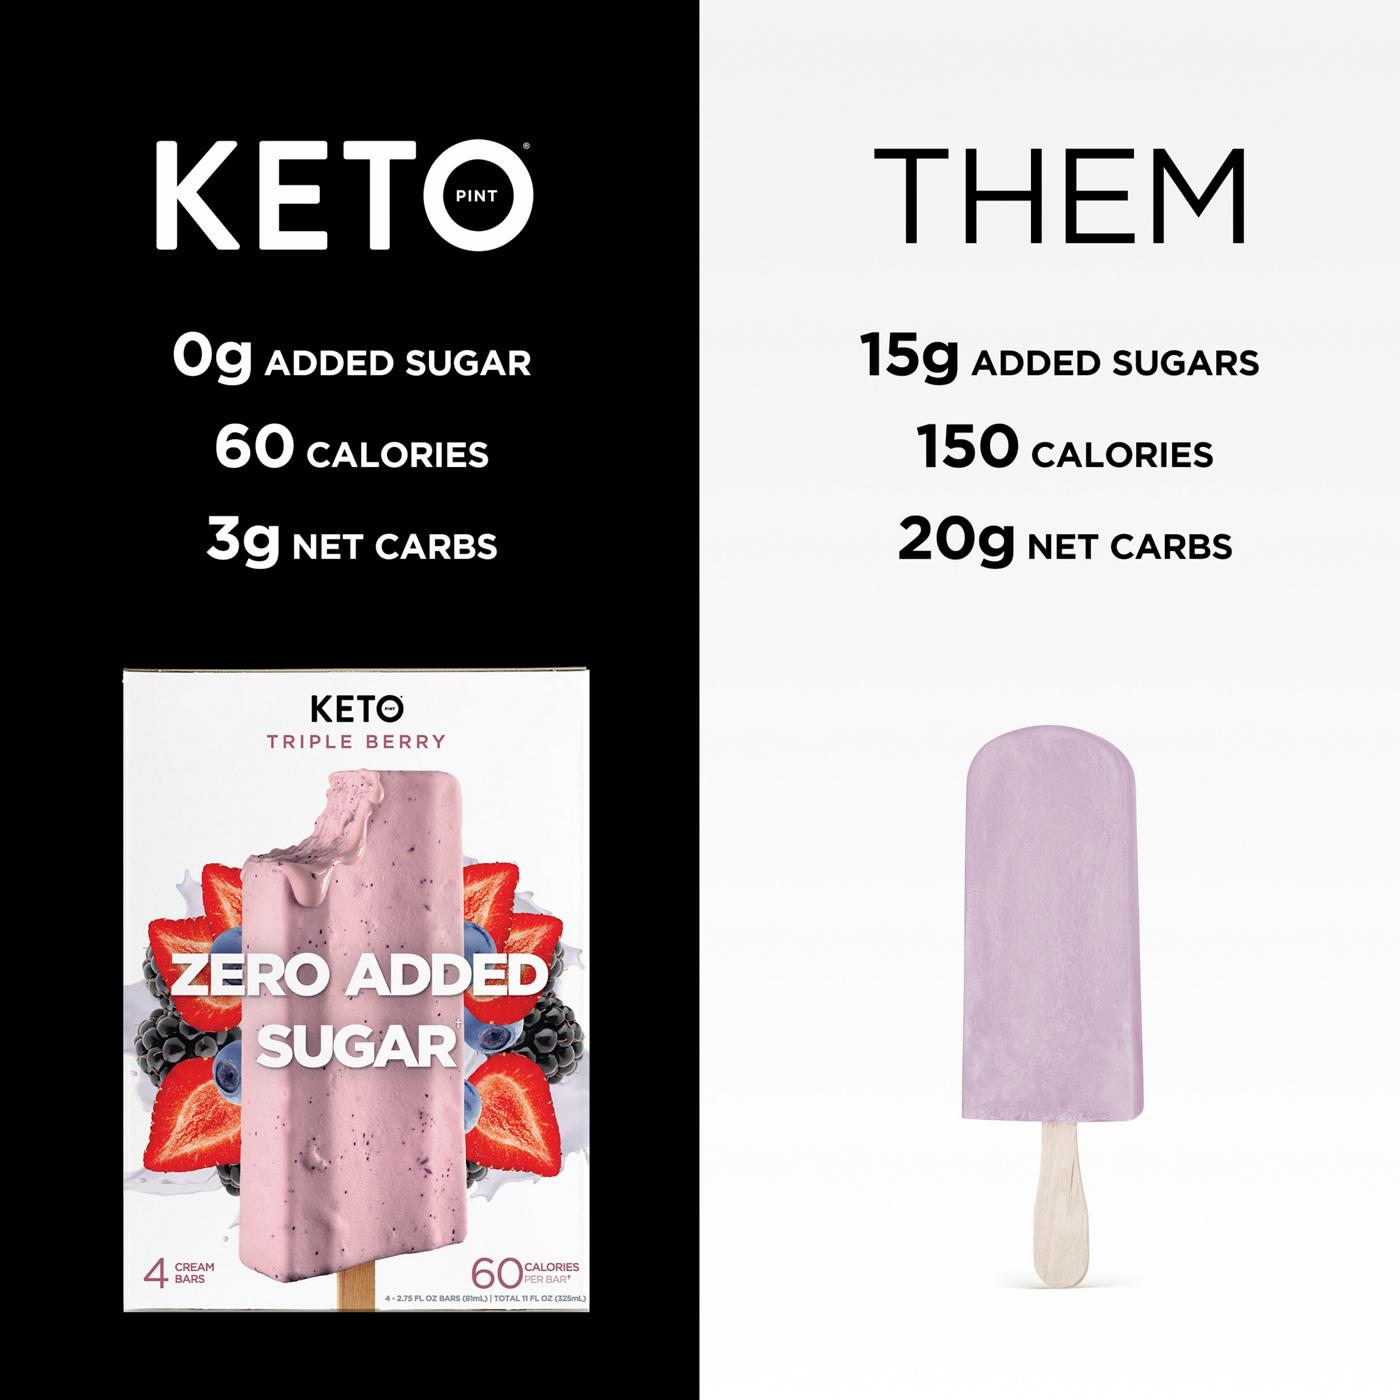 Keto Pint Zero Added Sugar Triple Berry Cream Bars; image 5 of 5